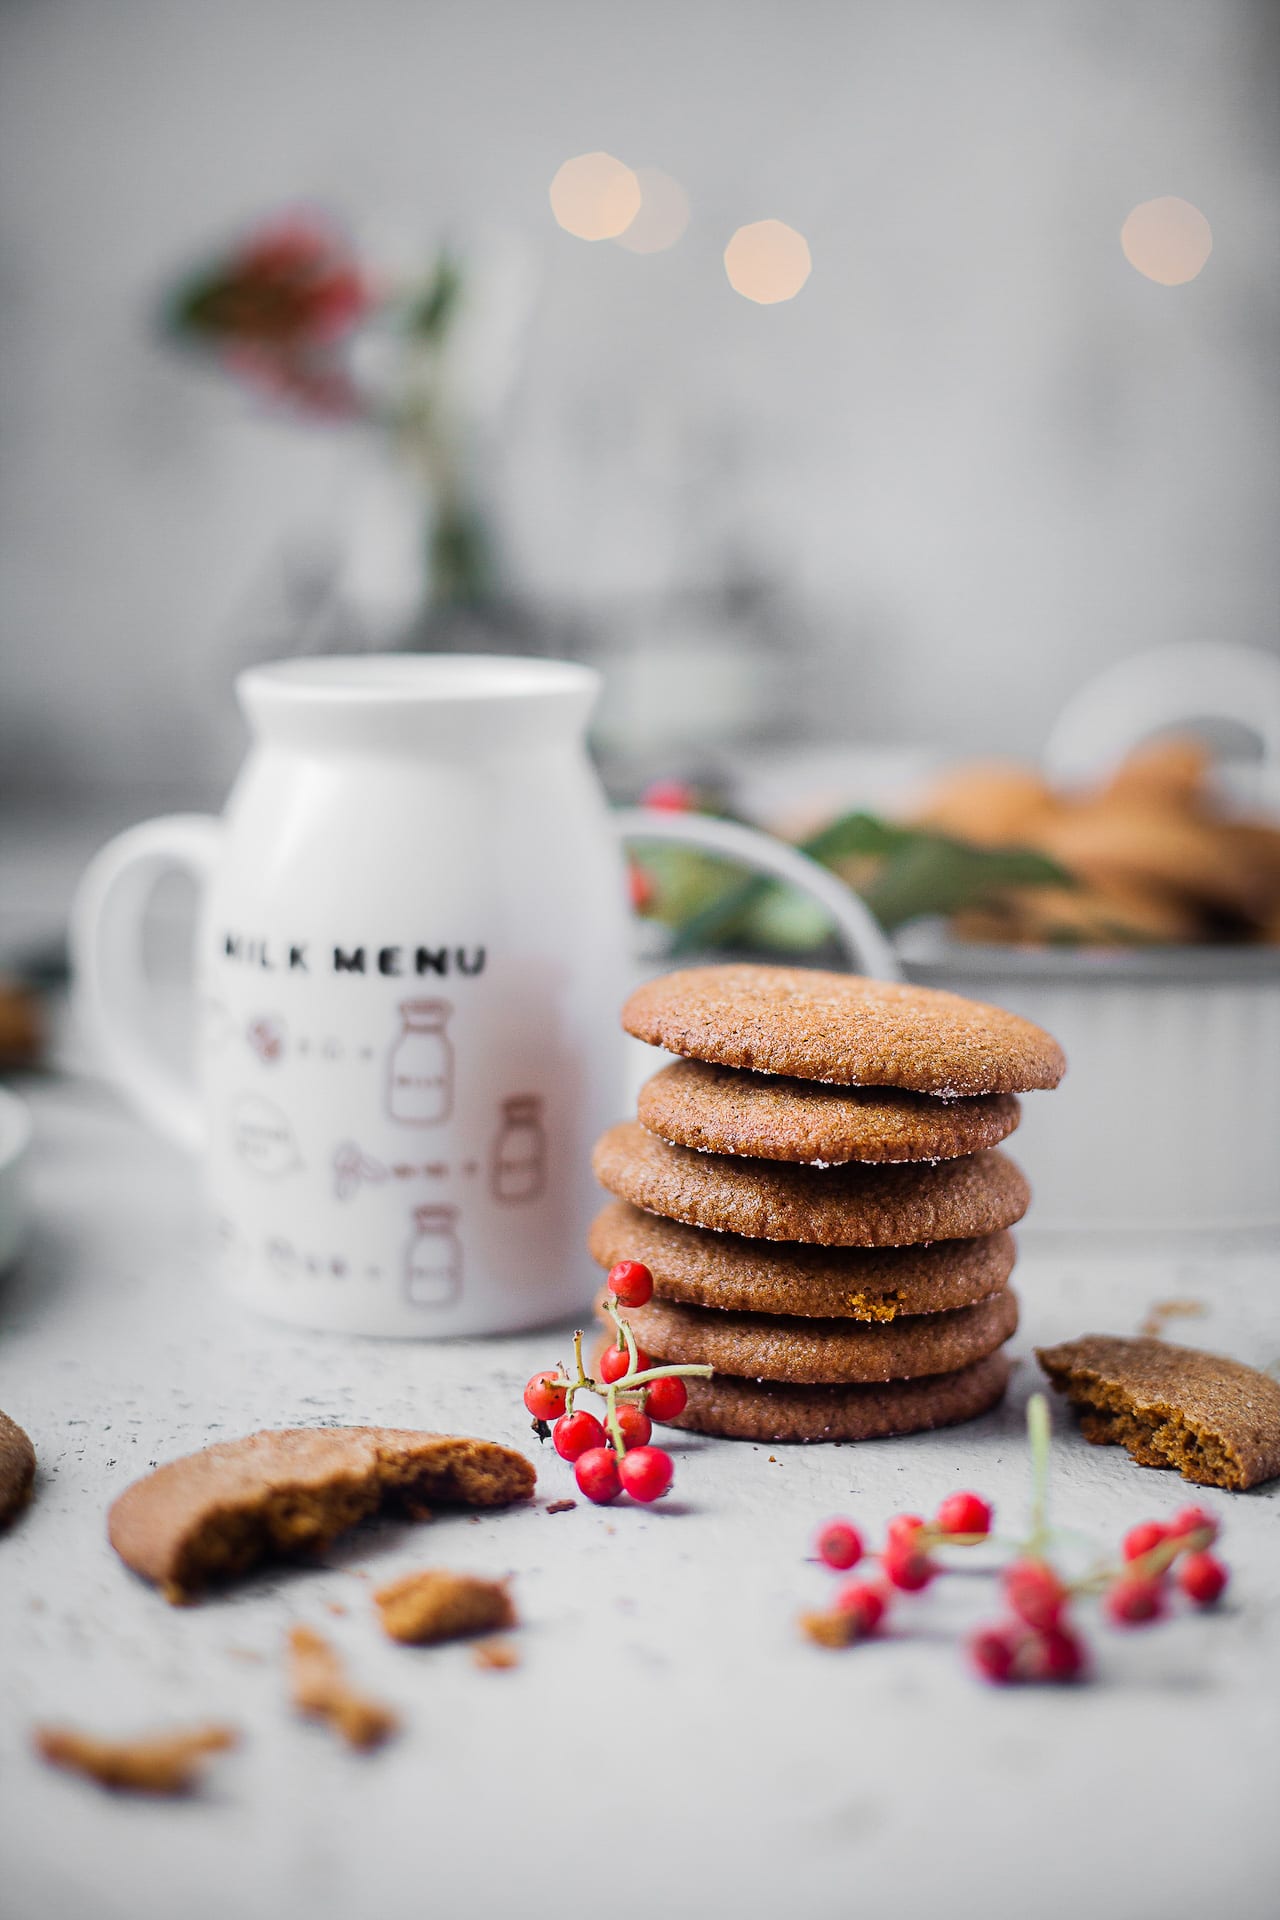 Holiday Treats | Playful Cooking #bakingwithkids #cookies #baking #foodphotography